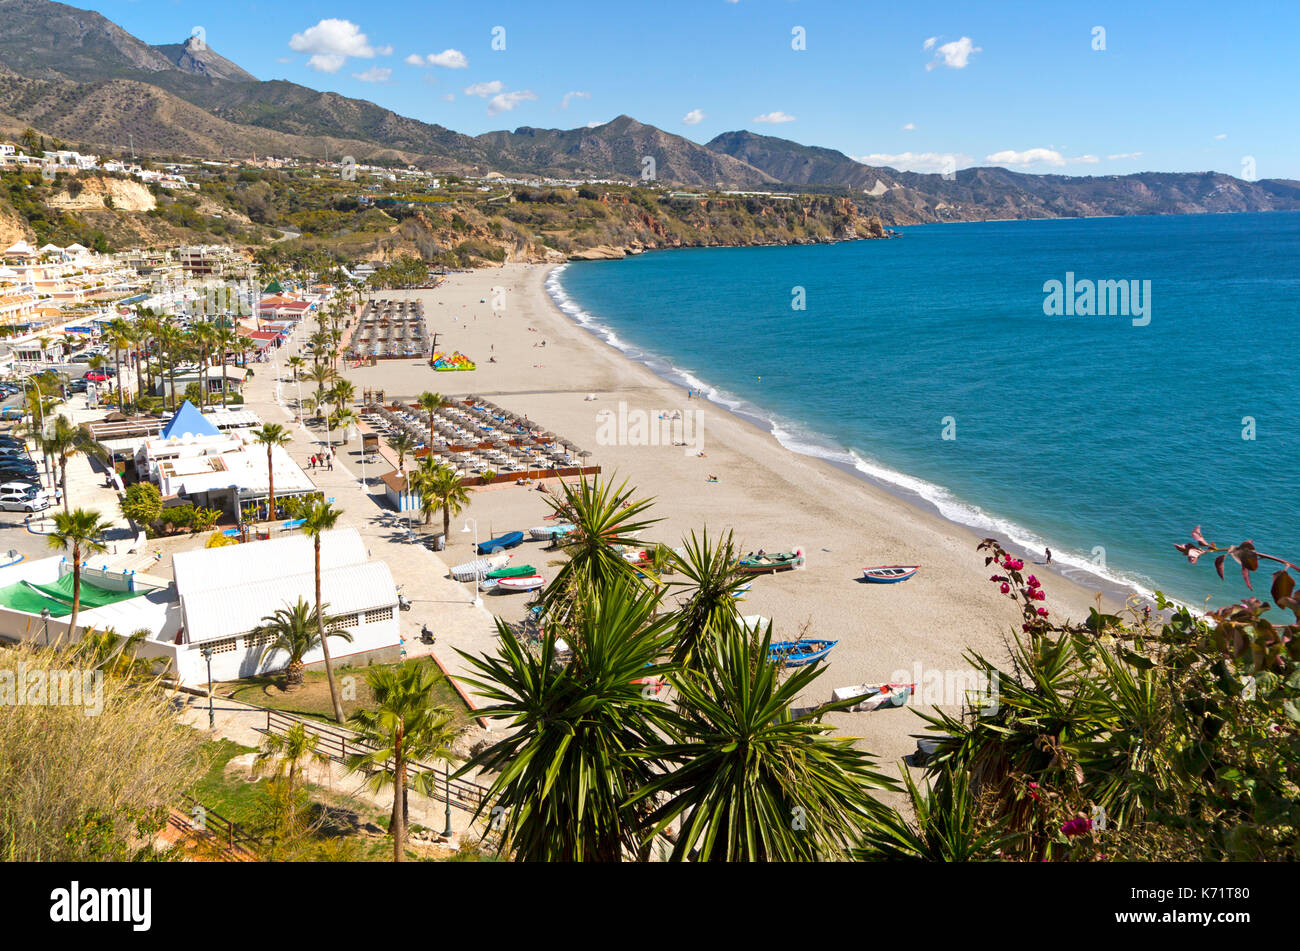 Playa Burriana sandy beach at popular holiday resort town of Nerja, Malaga province, Spain Stock Photo